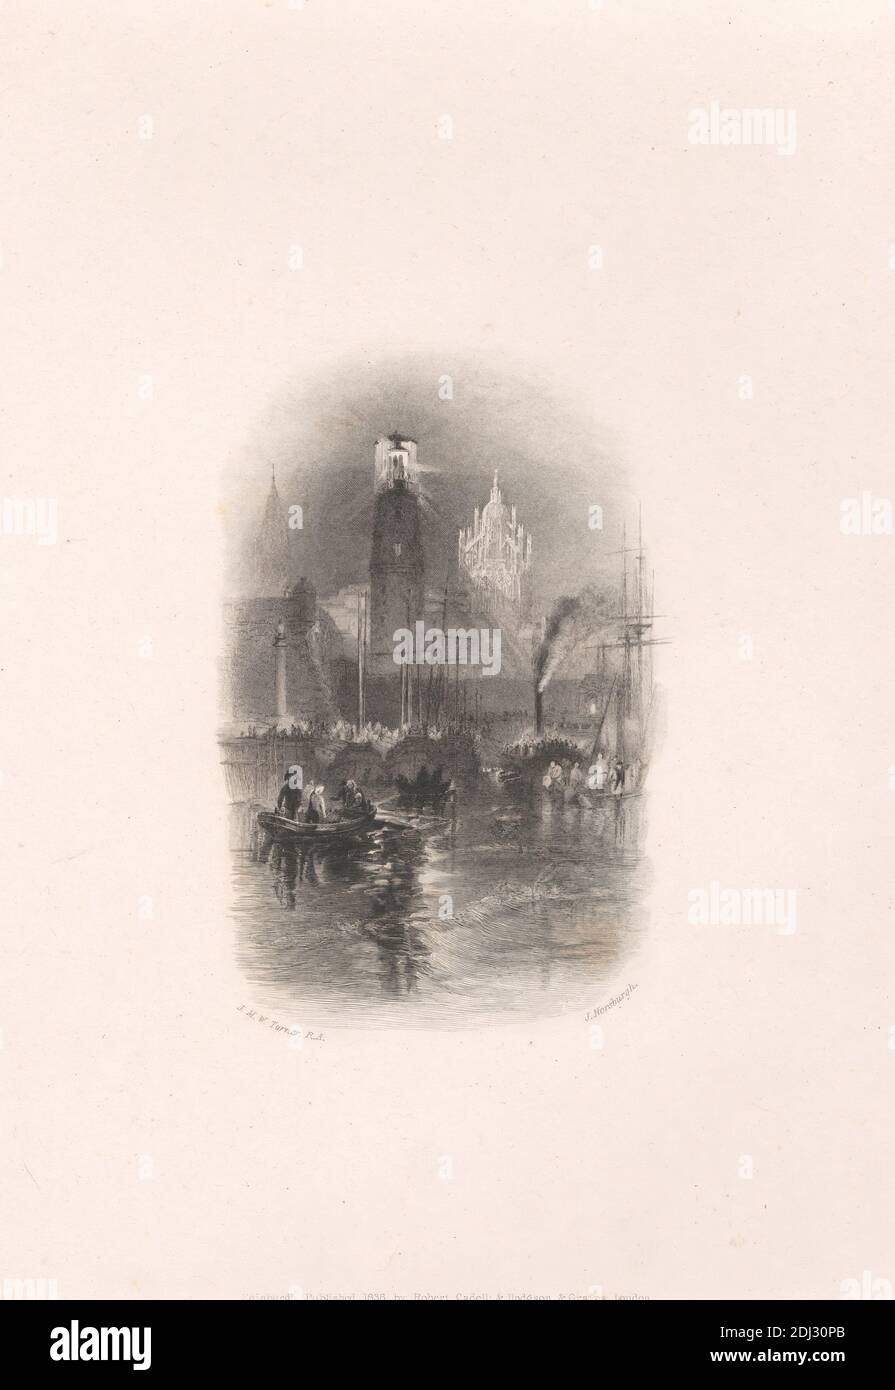 Calais (Vignette), John Horsburgh, 1791–1869, British, after Joseph Mallord William Turner, 1775–1851, British, 1836, Line engraving Stock Photo